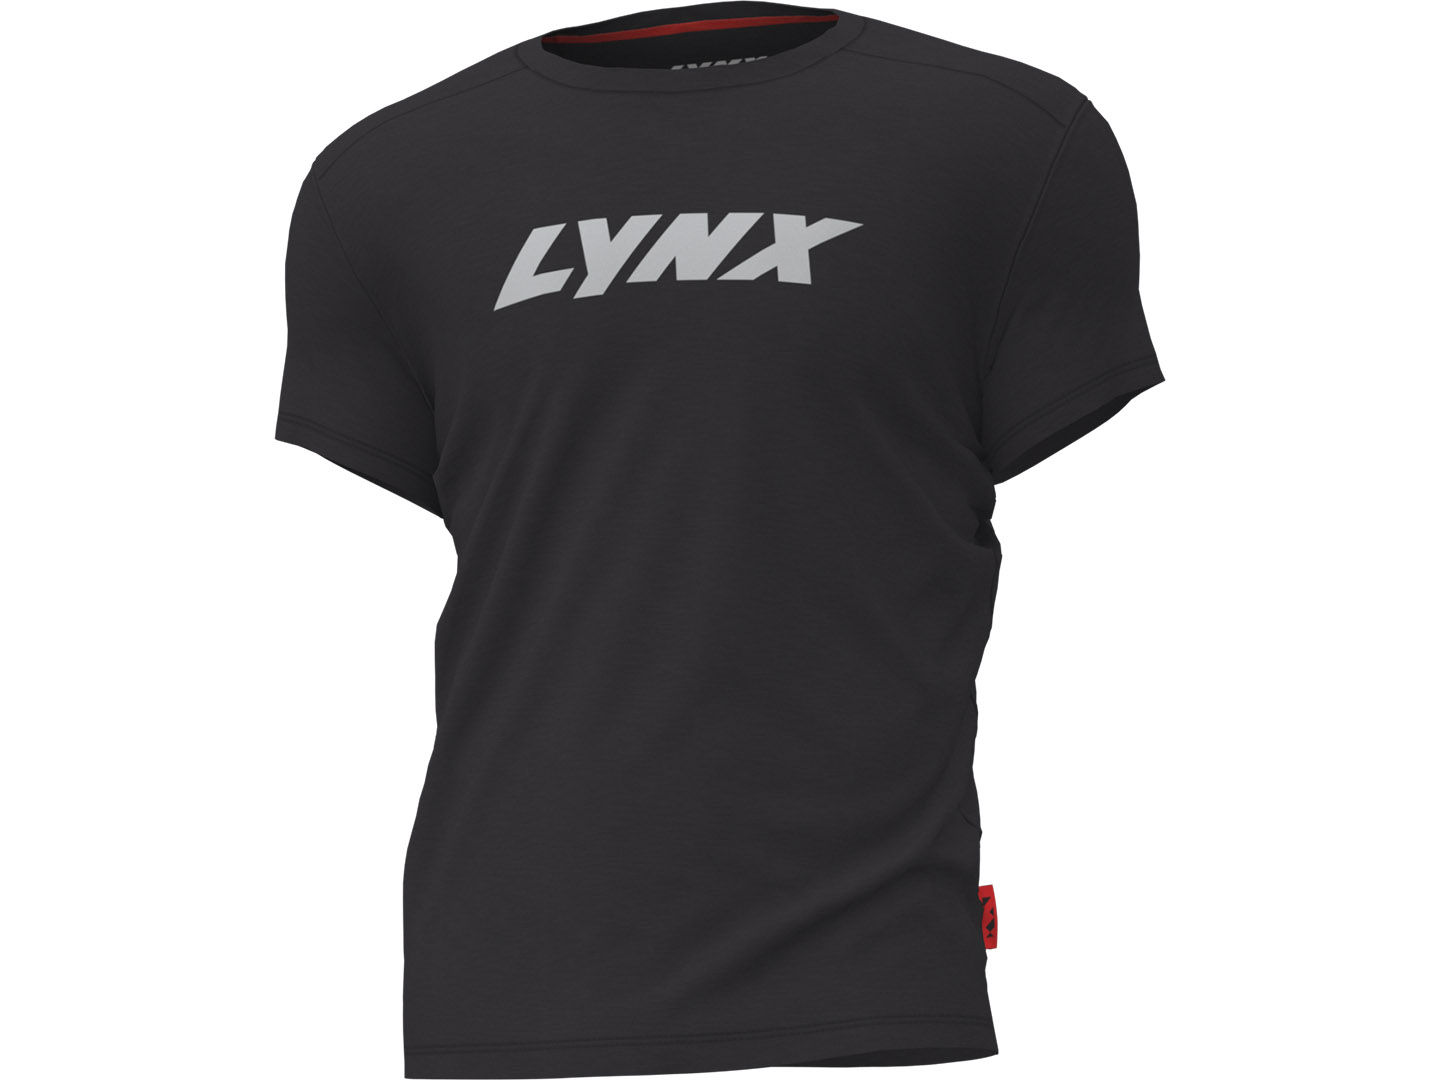 Black Lynx Signature T-Shirt